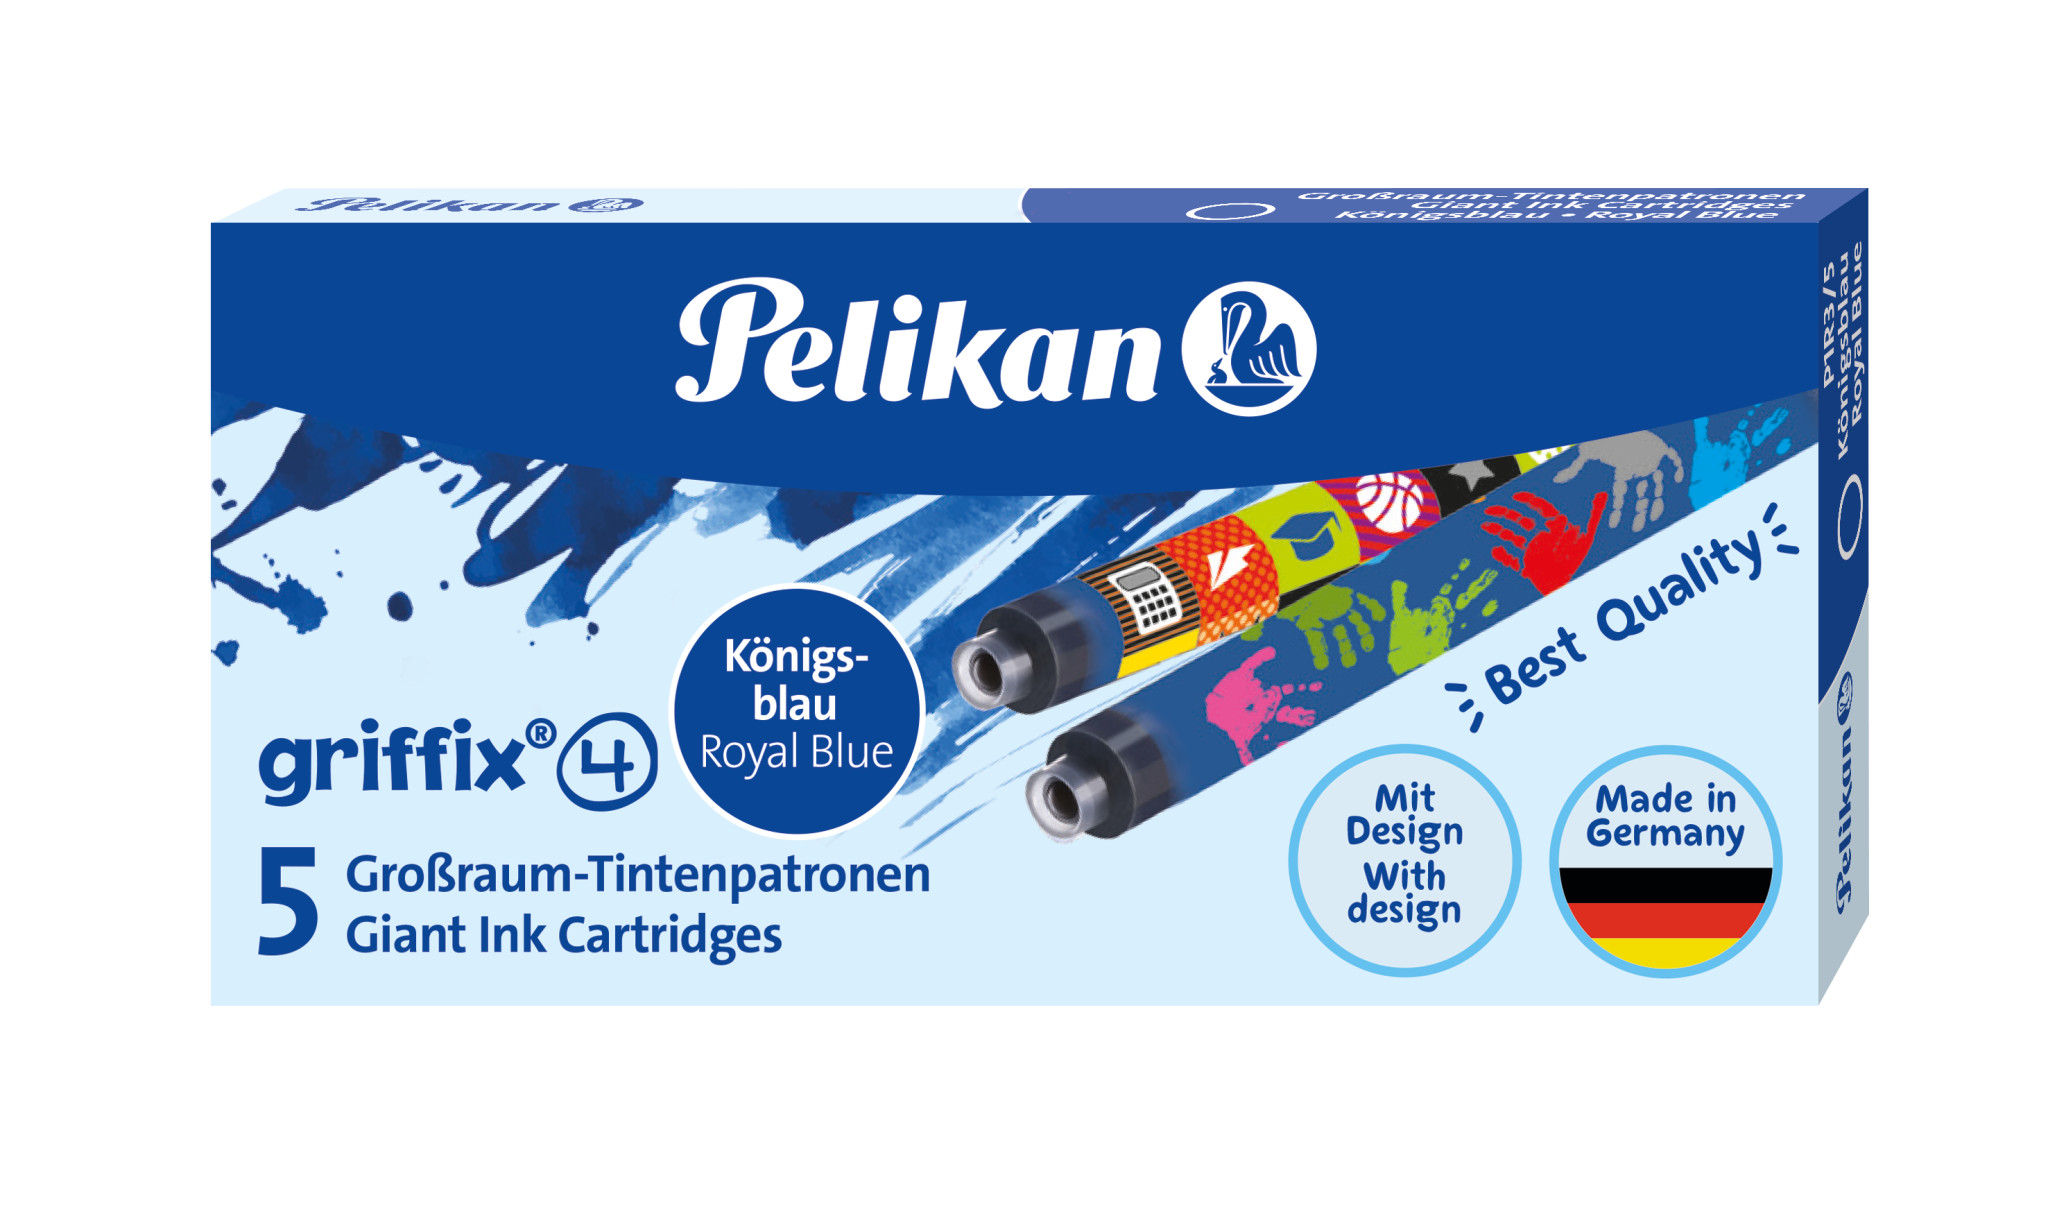 Pelikan - Großraum-Tintenpatrone 4001 GTP für griffix - 5 Stück - Königsblau